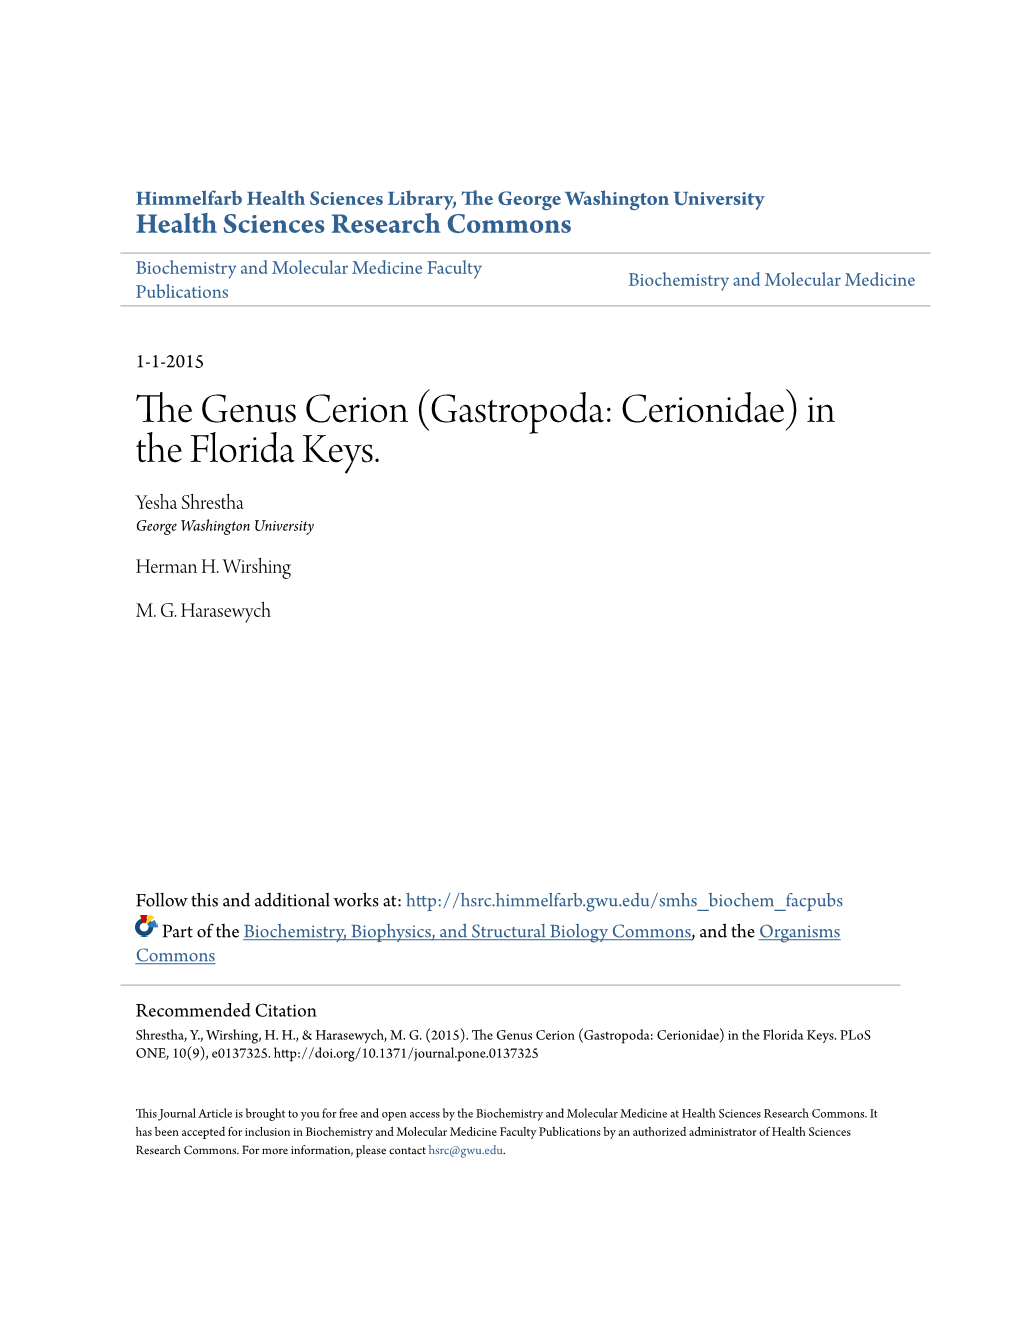 The Genus Cerion (Gastropoda: Cerionidae) in the Florida Keys. Yesha Shrestha George Washington University